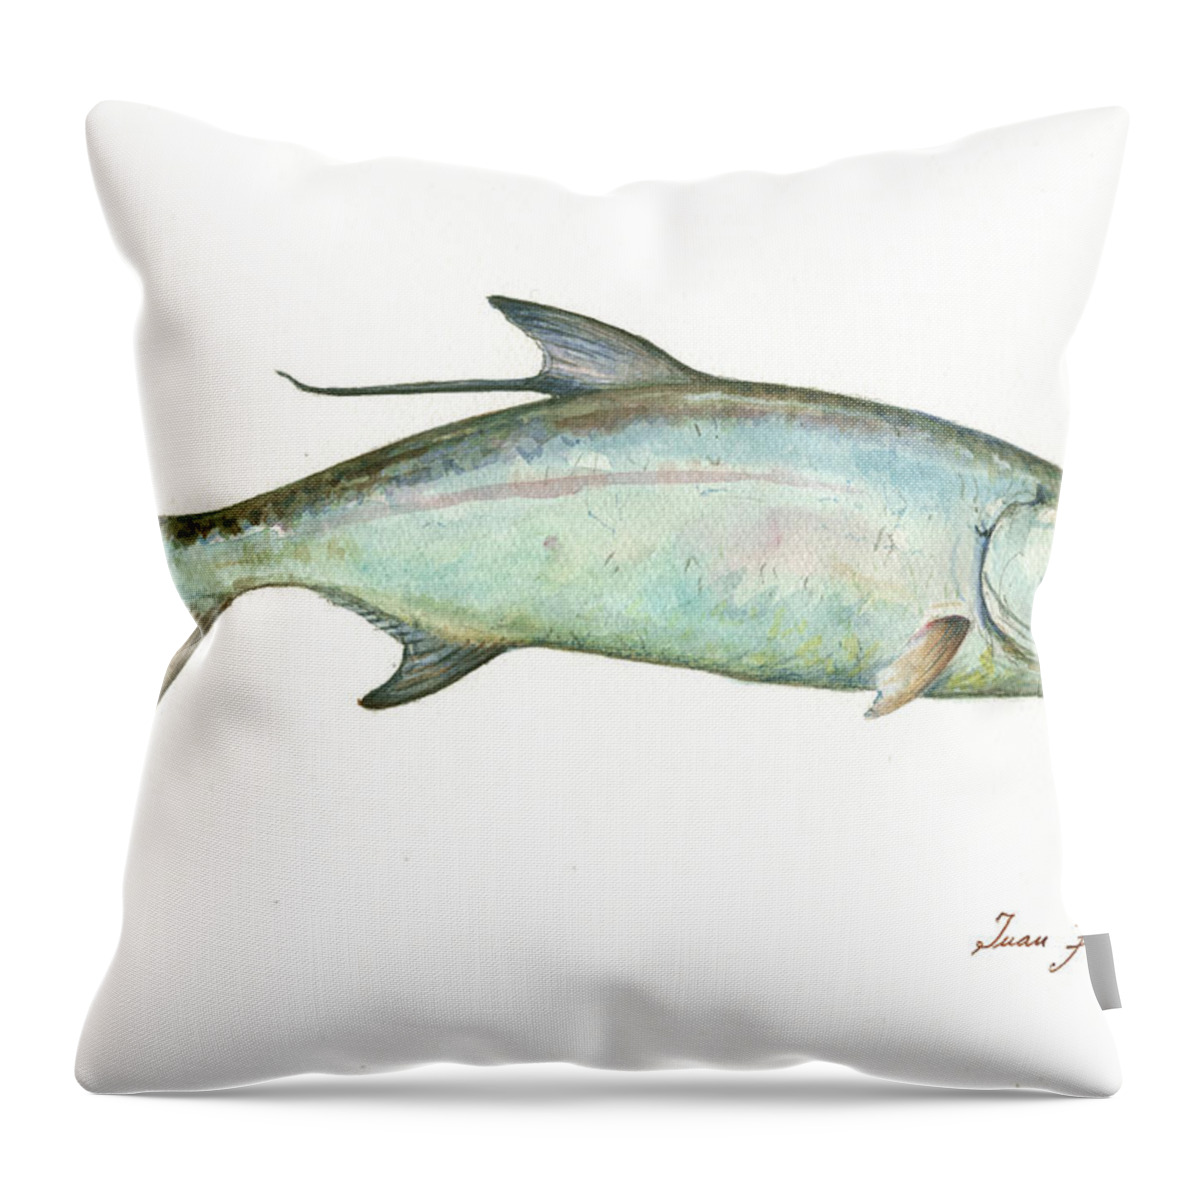 Tarpon Fish Throw Pillow featuring the painting Tarpon fishf by Juan Bosco